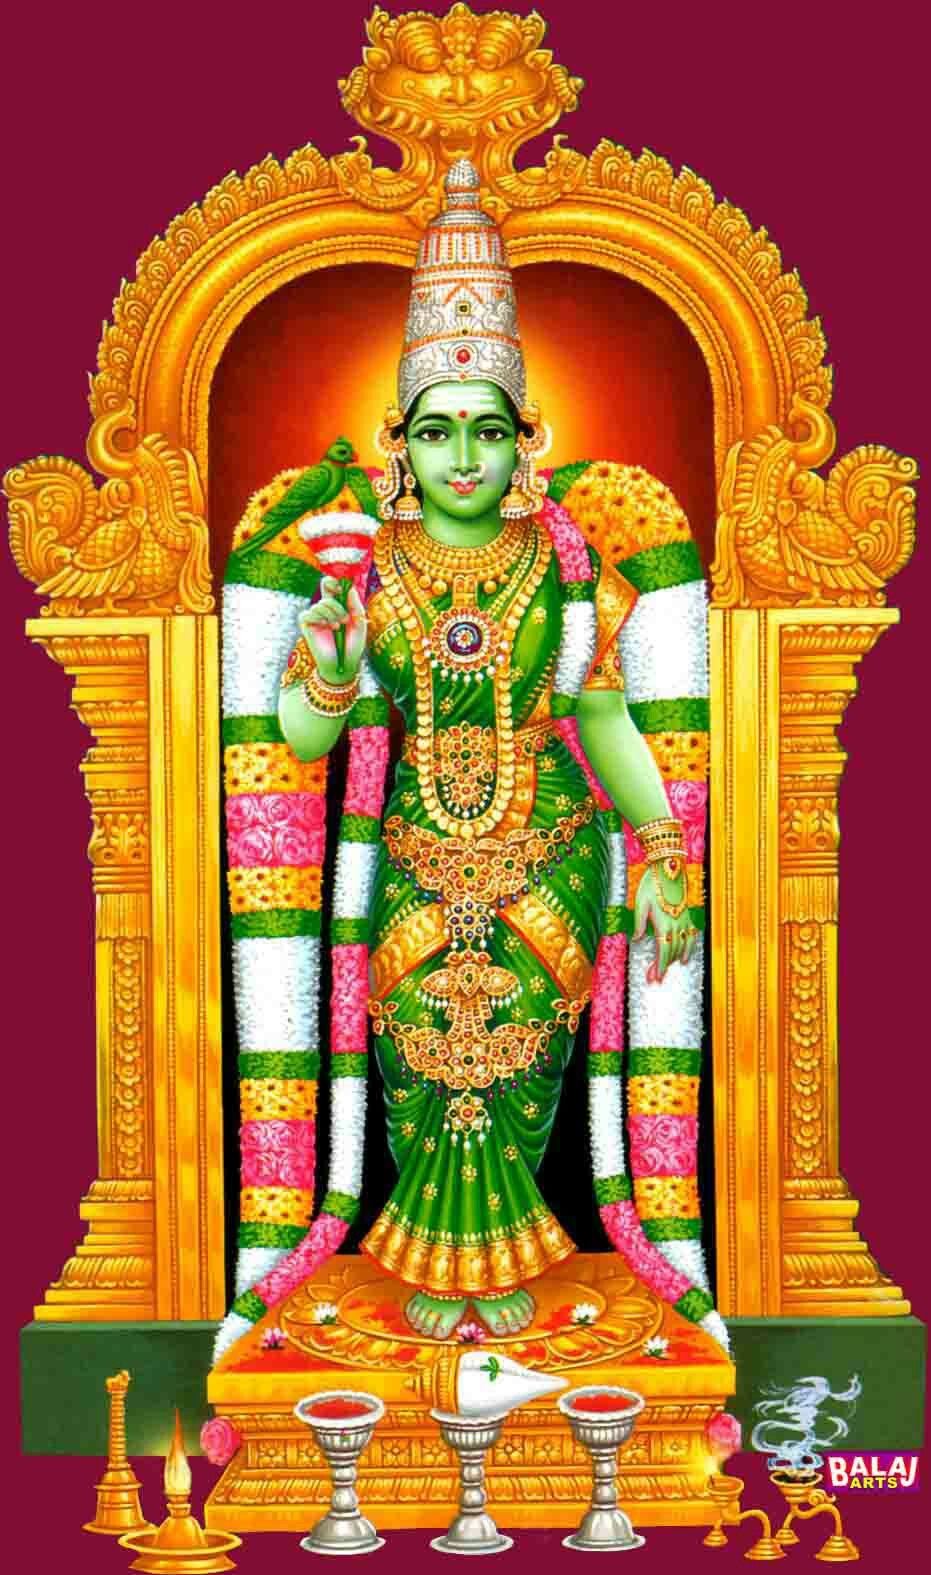 Goddess Madurai Meenakshi Amman Images & Wallpapers ...